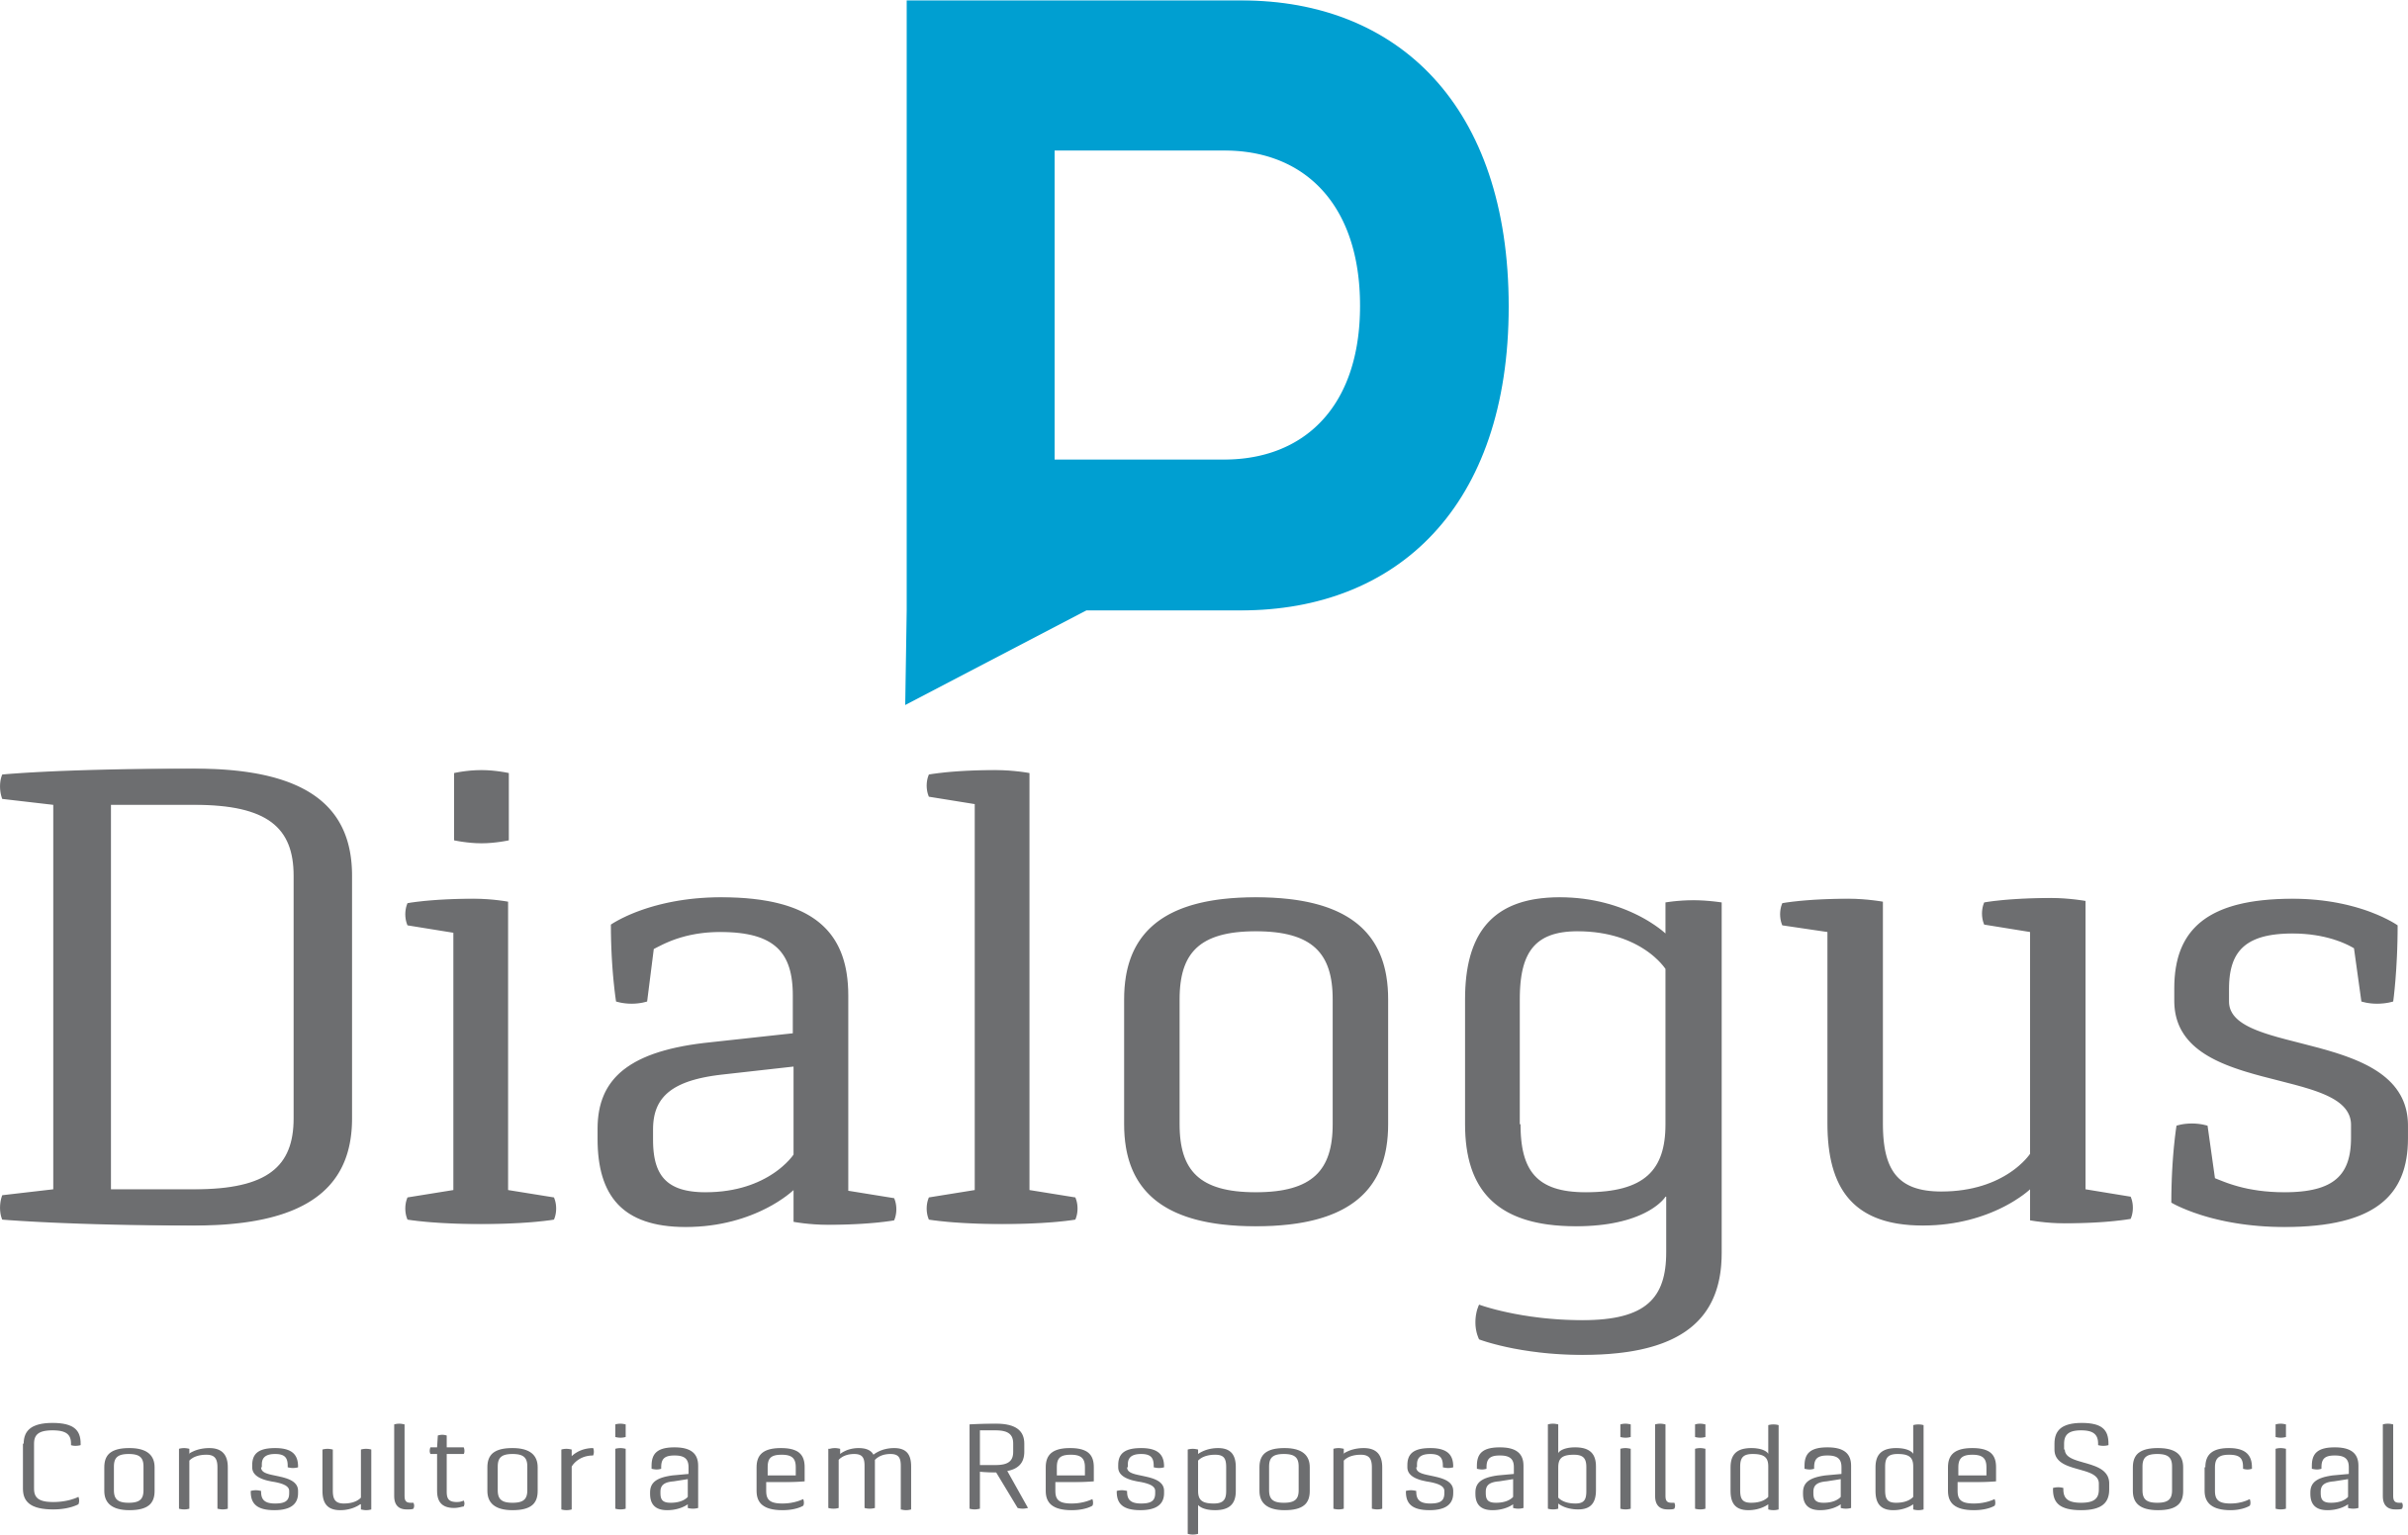 Dialogus Responsabilidade Social - Consultoria - Painel de Sustentabilidade Ambiental - Fortaleza/CE